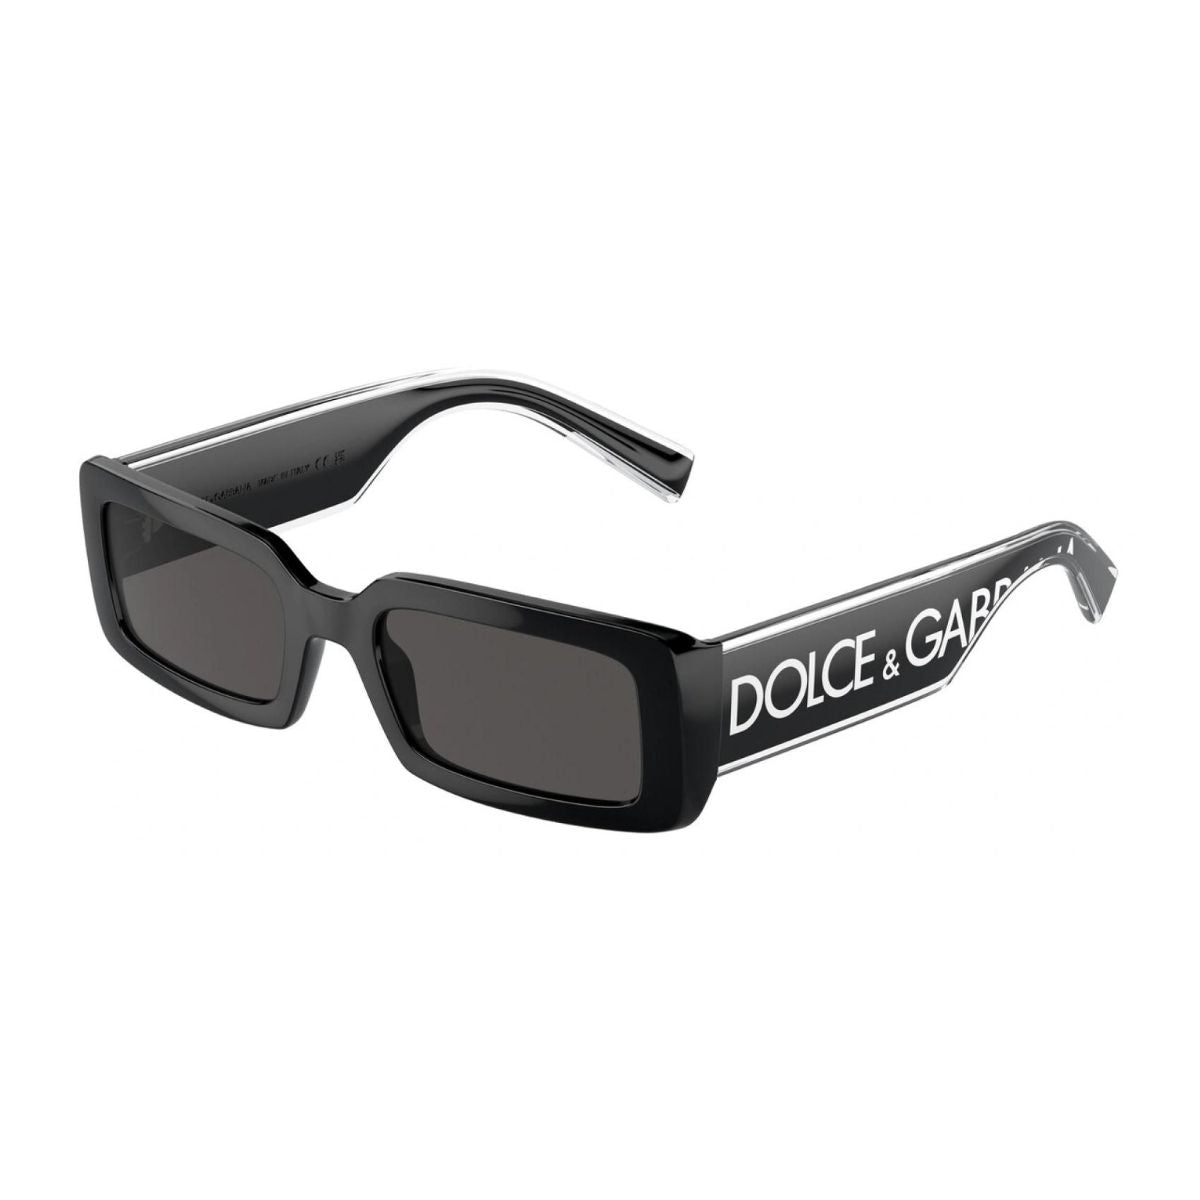 "Dolce & Gabbana DG6187 501/87 Eyewear Sunglass, UV protection, great for both men and women."